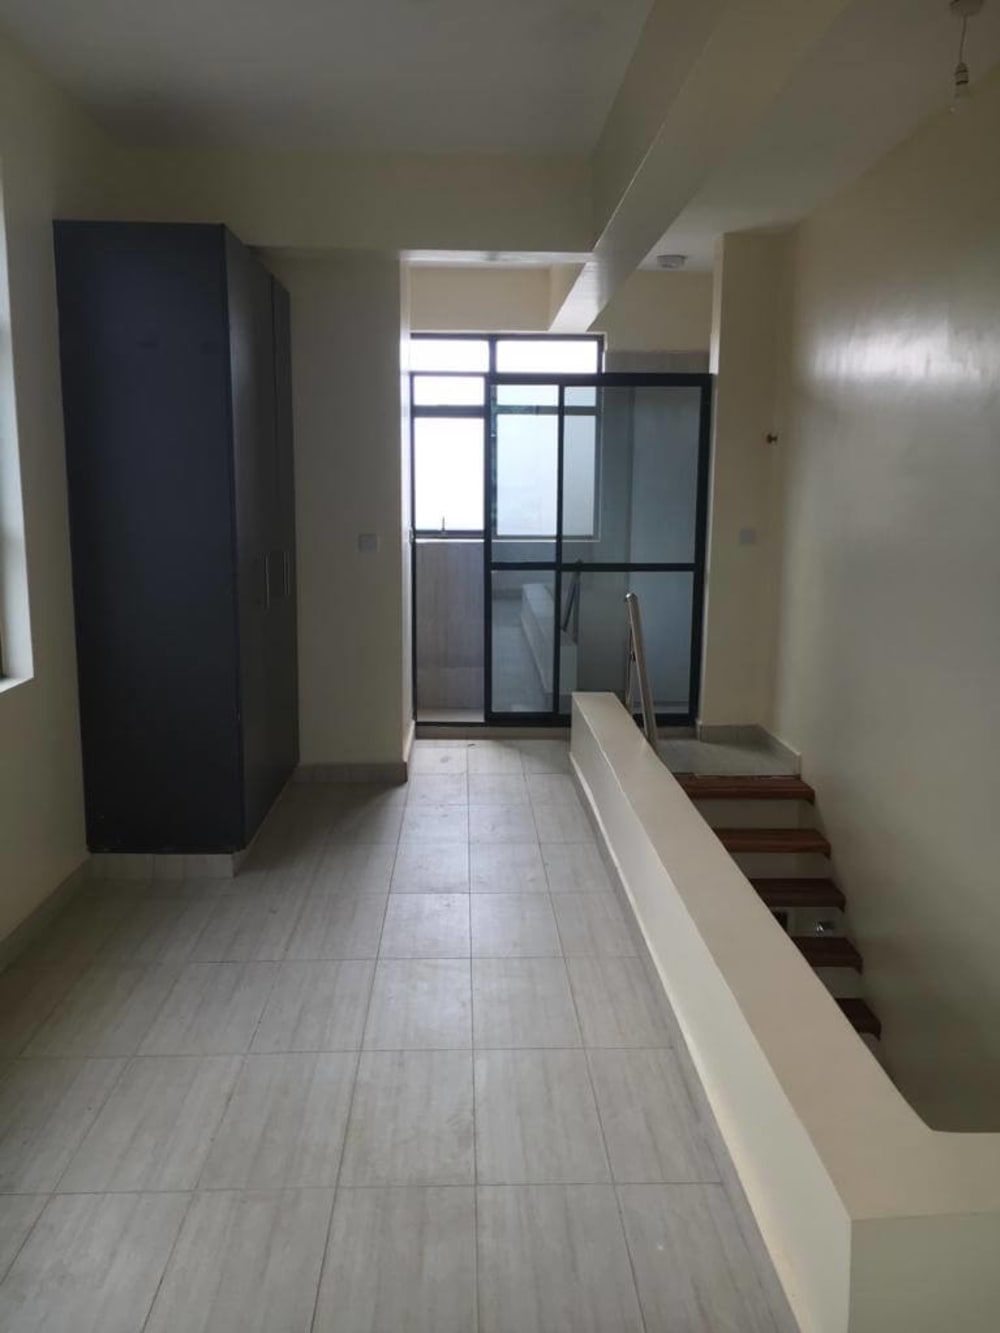 2 bedroom Apartment for sale in Limuru Road